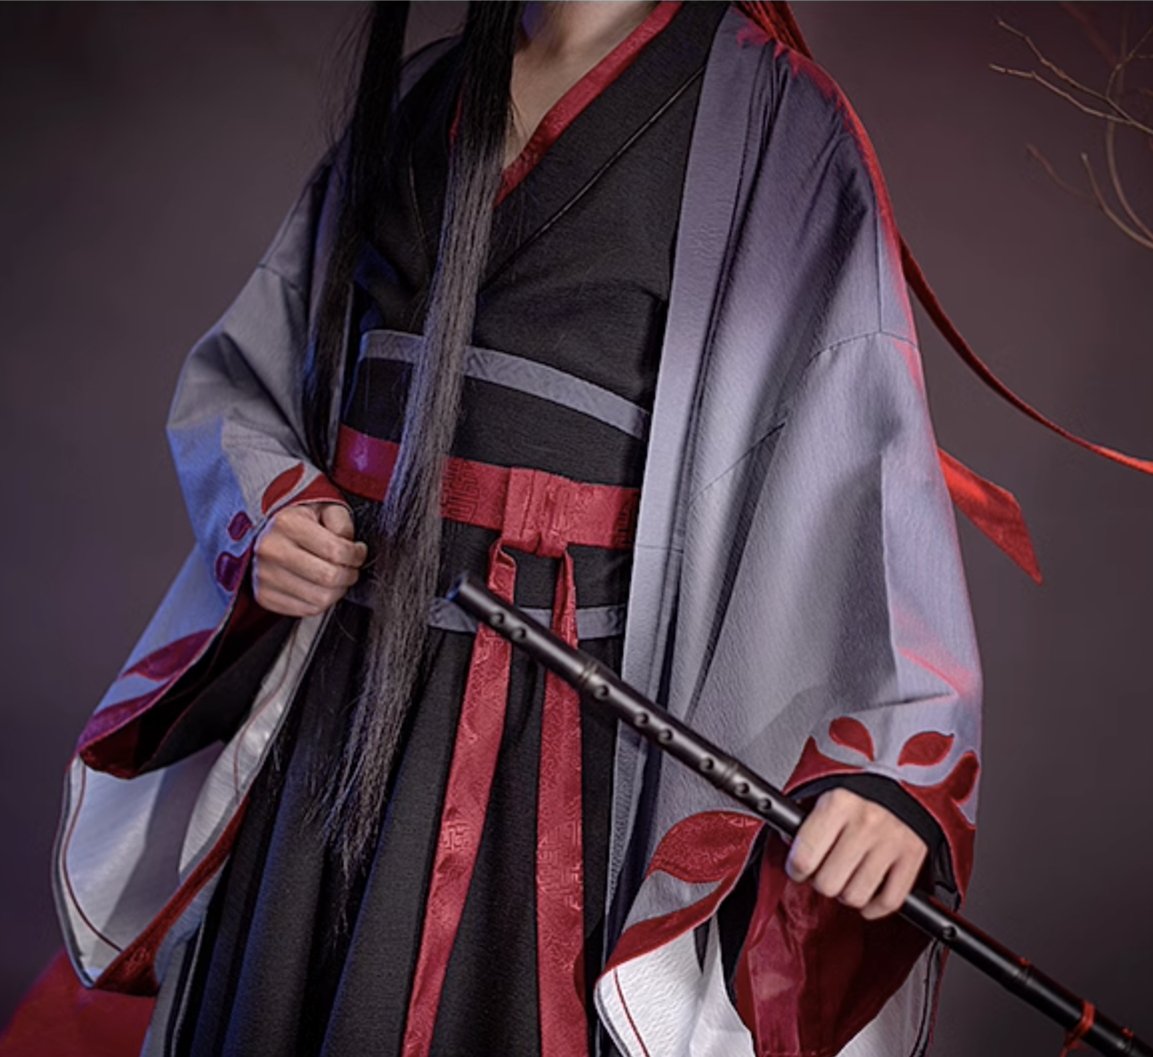 MDZS Yiling Patriarch Wei Wuxian Cosplay Anime Costume 15236:352251